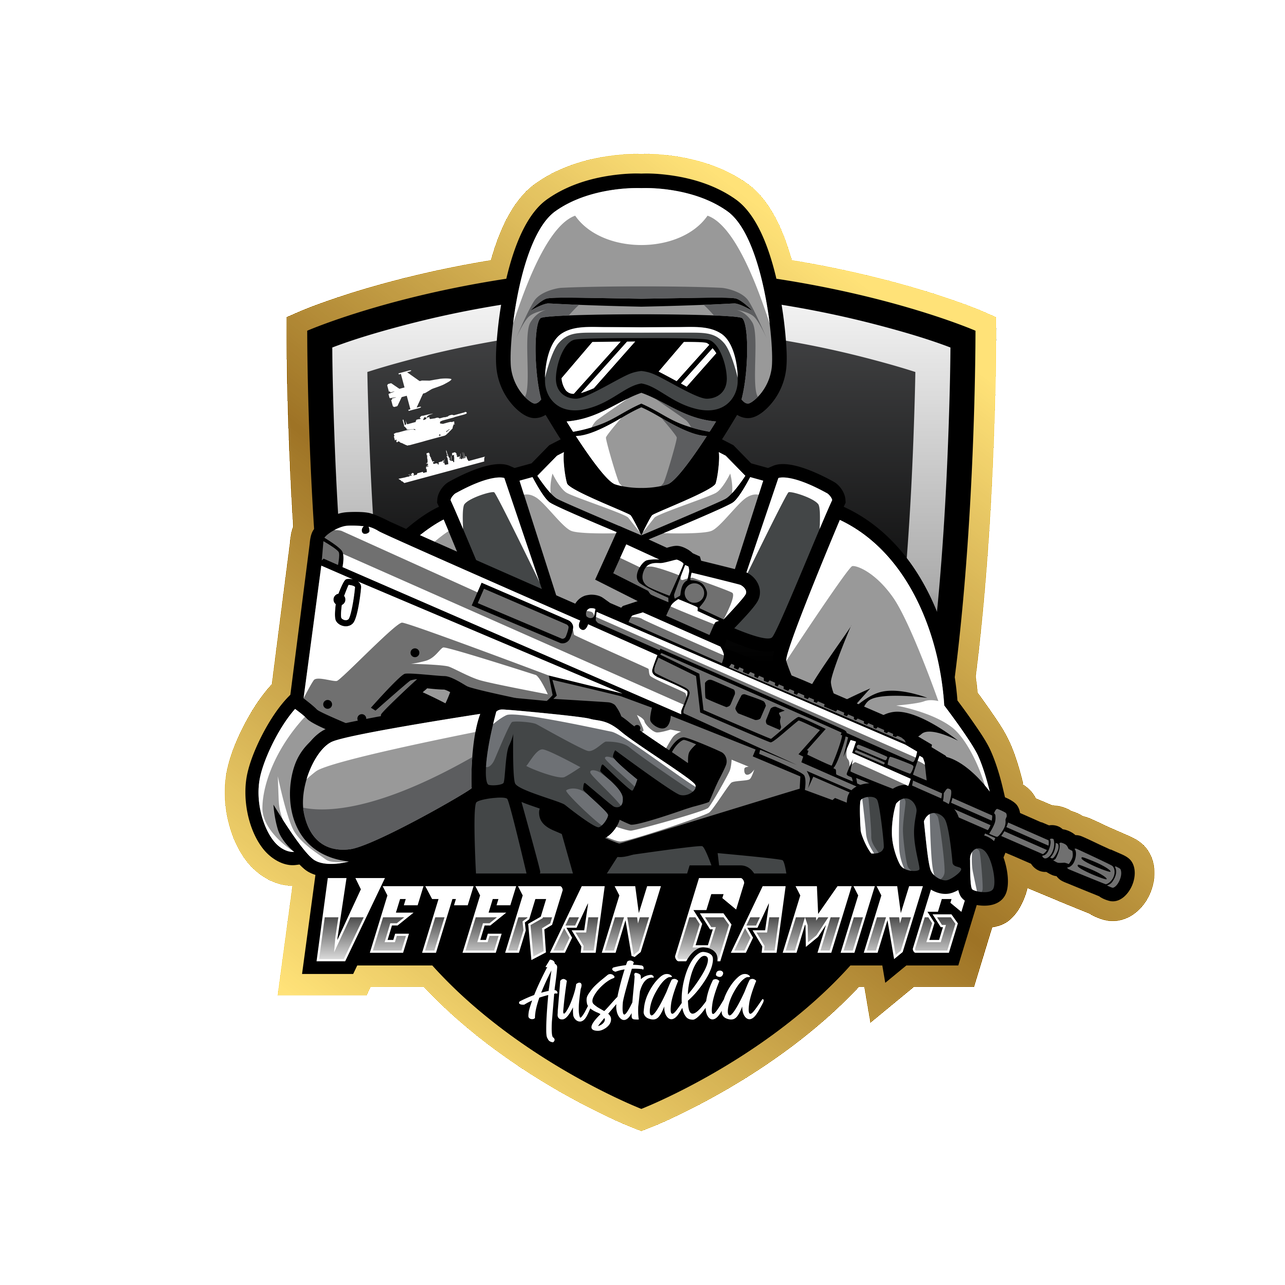 Veteran Gaming Australia logo